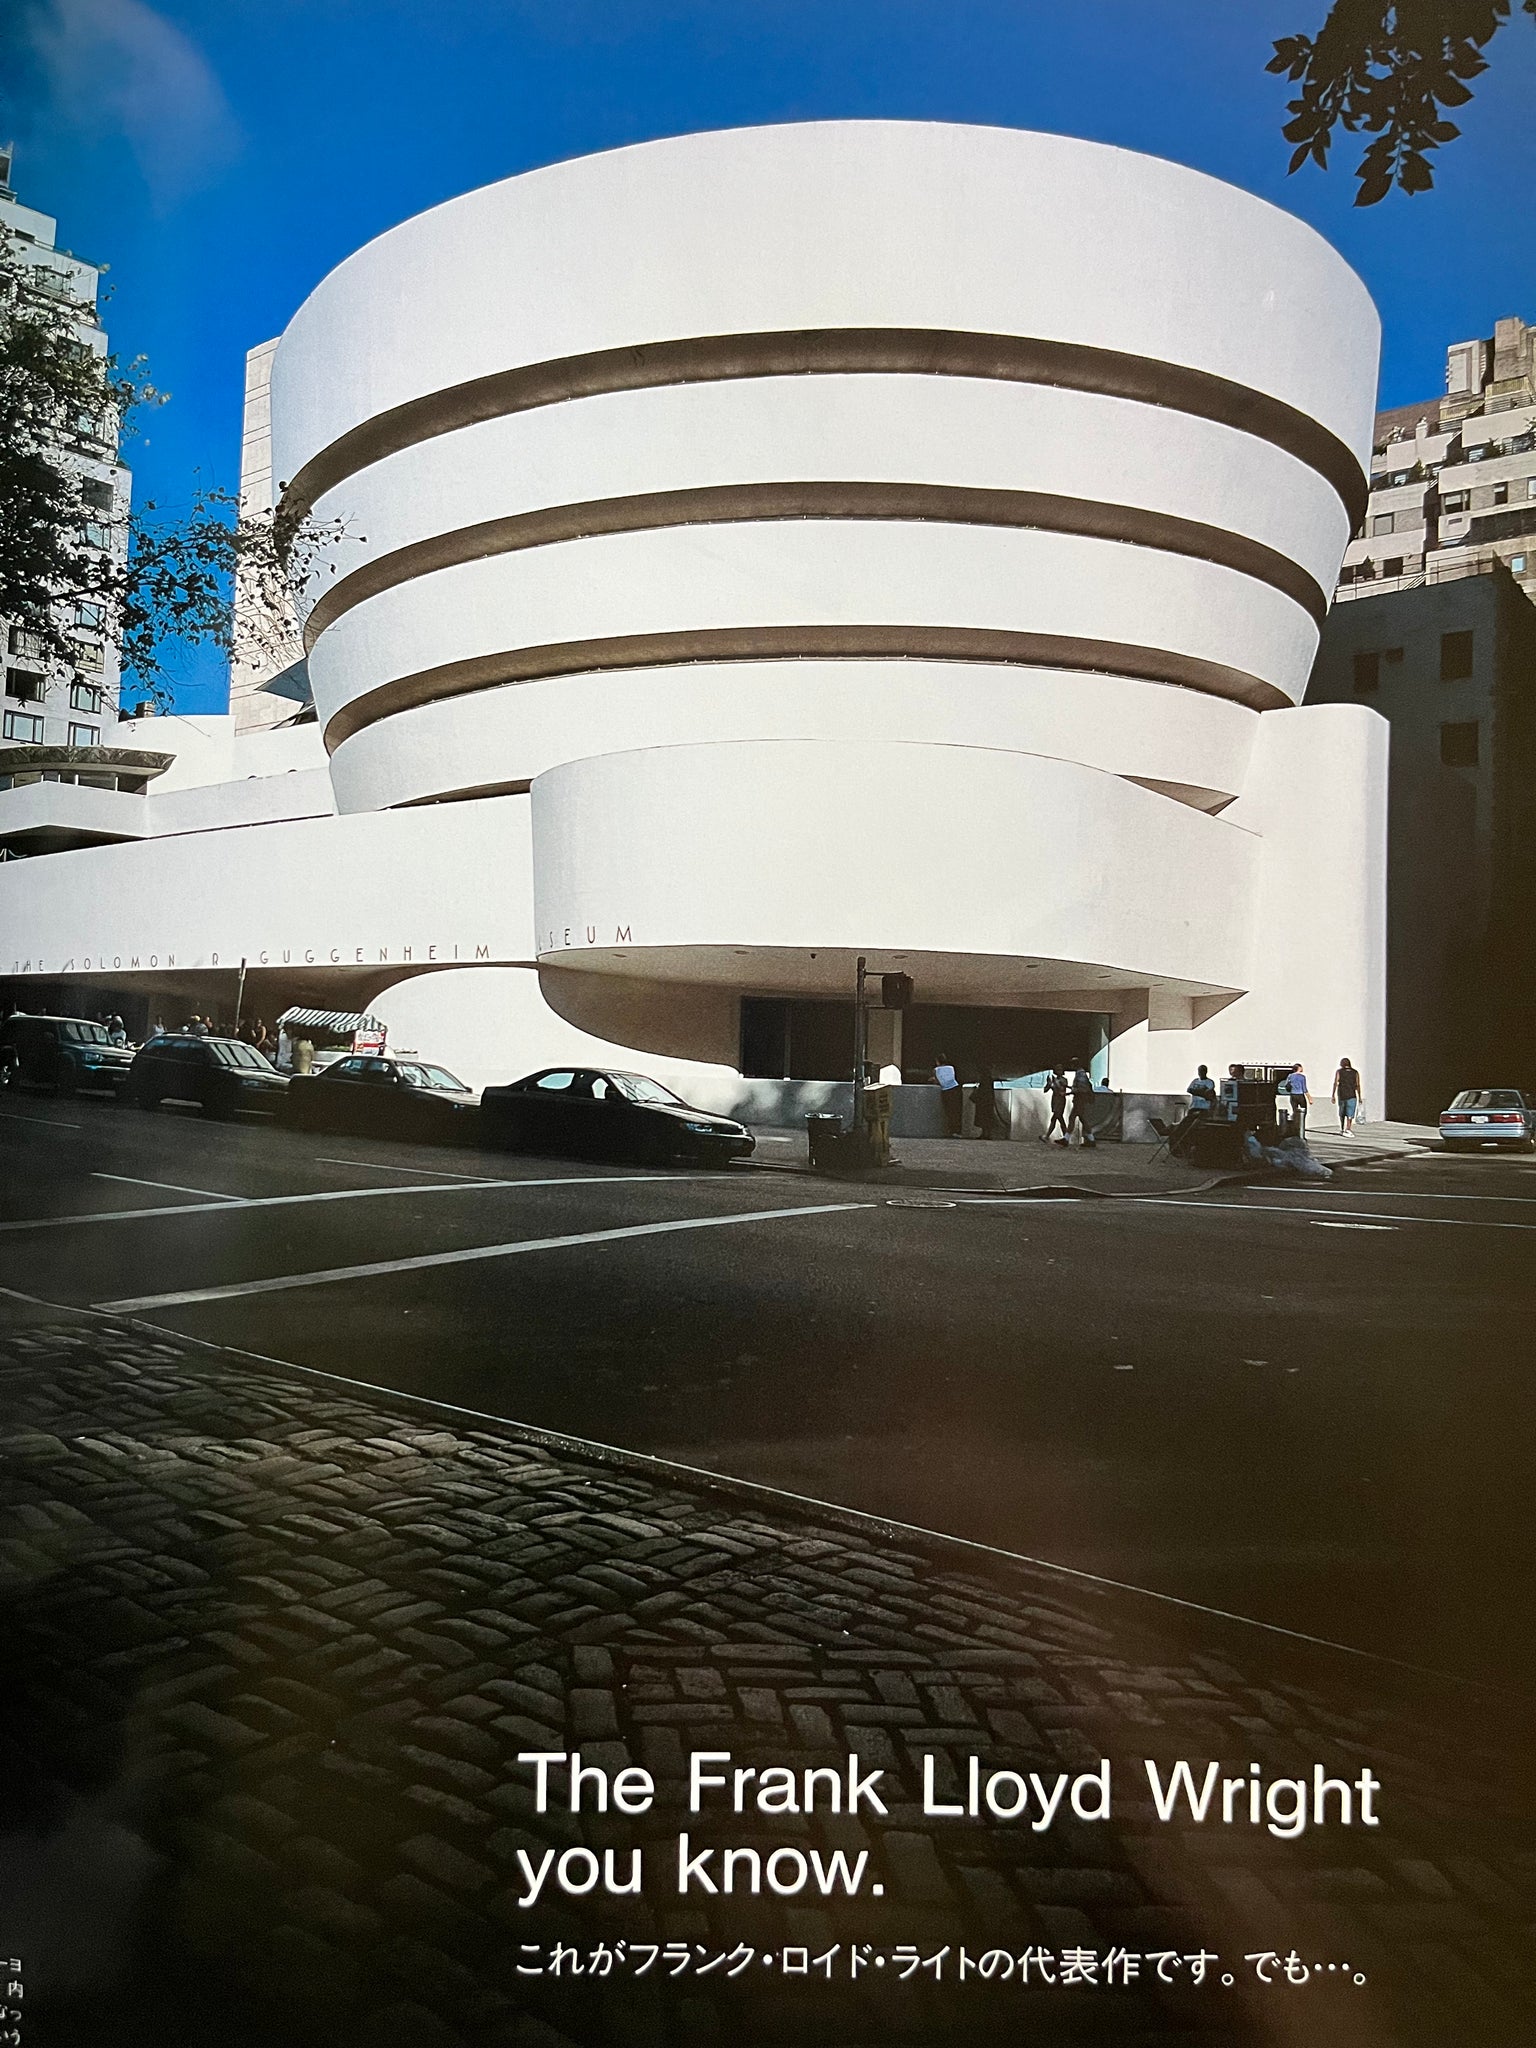 Casa Brutus 21 - Frank Lloyd Wright